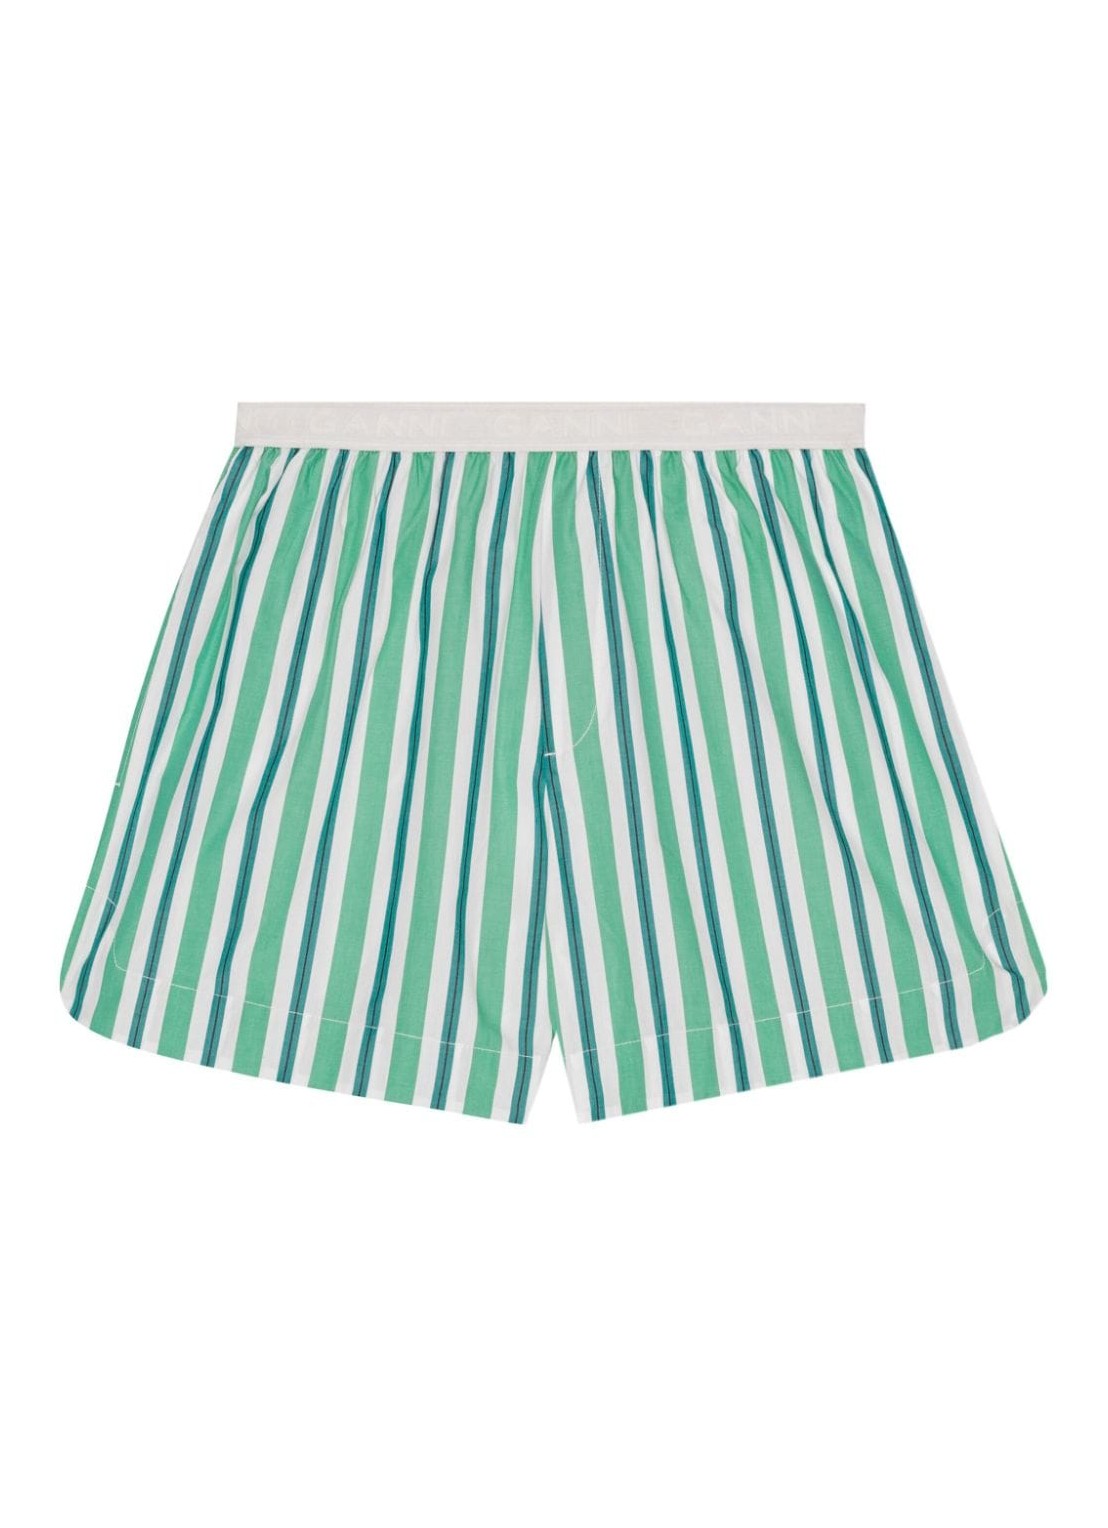 Pantalon corto ganni short pant womanstripe cotton elasticated shorts - f8925 879 talla verde
 